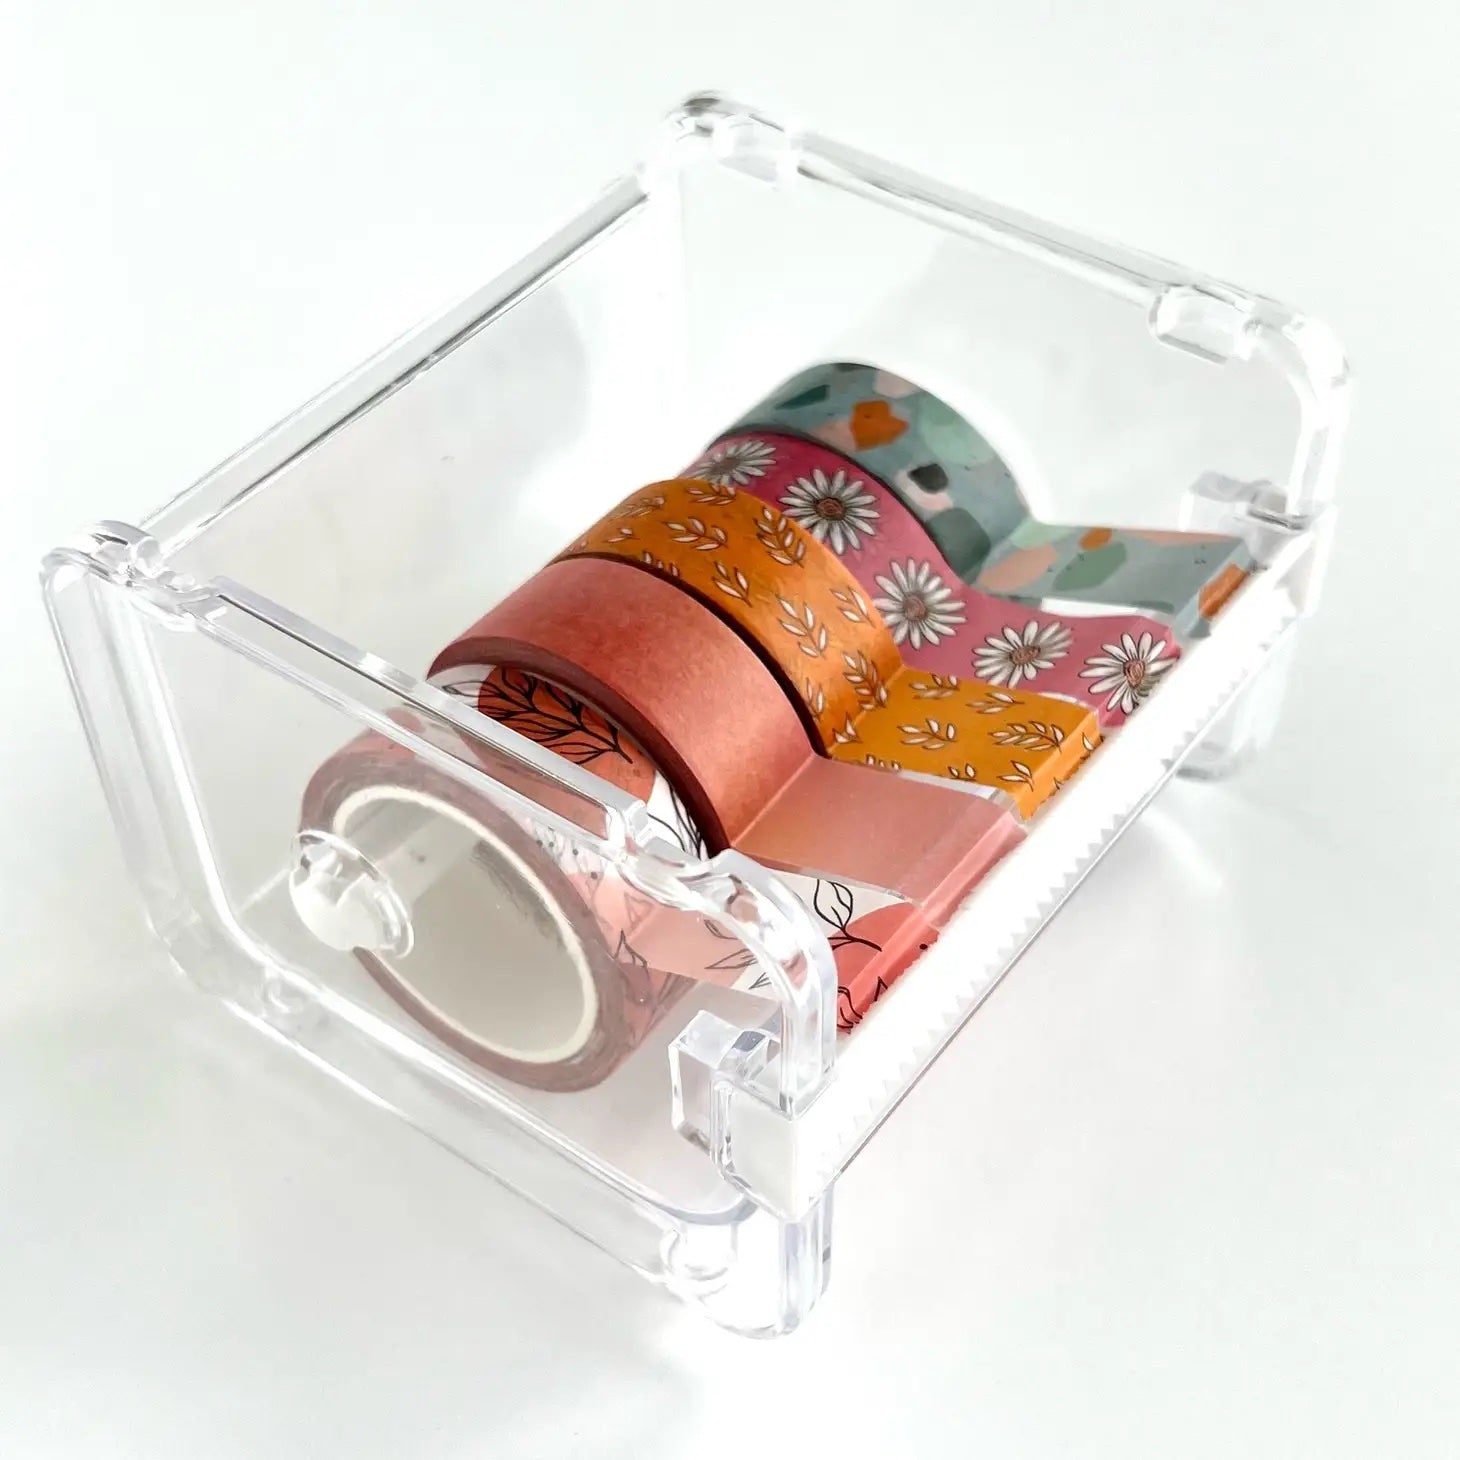 Washi Tape Dispenser - EVERYTHING CUTEE 